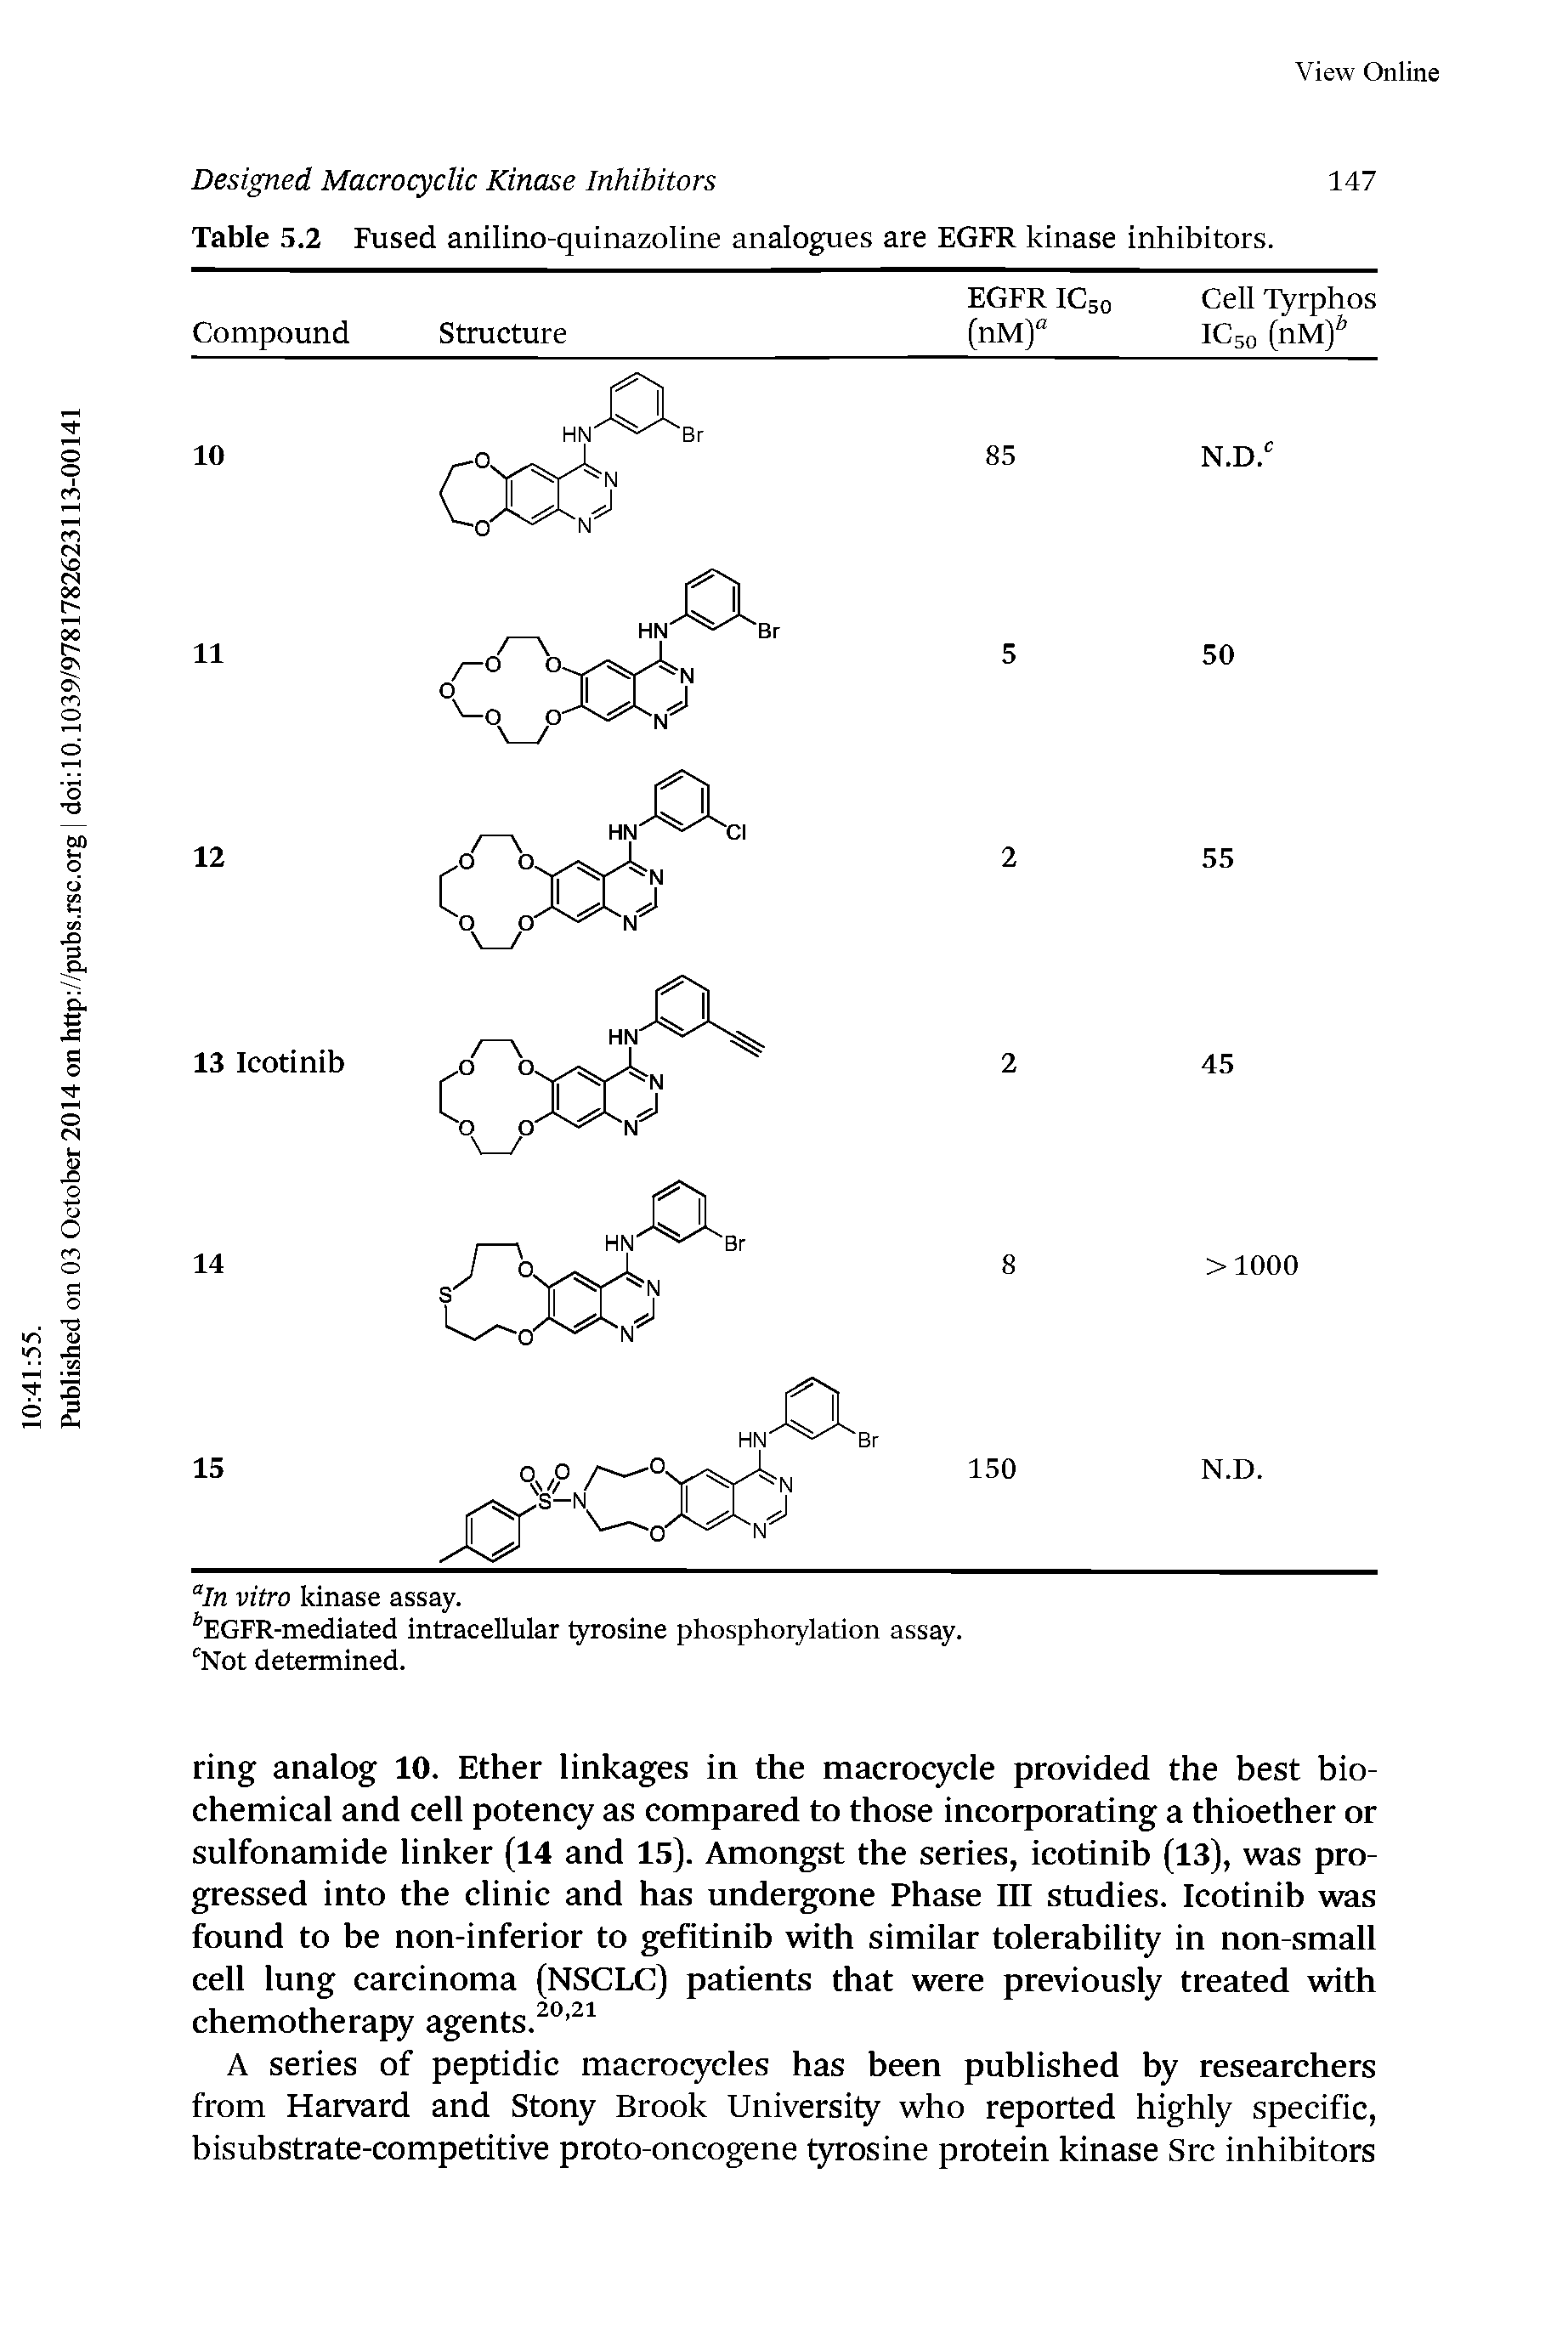 Table 5.2 Fused anilino-quinazoline analogues are EGFR kinase inhibitors.